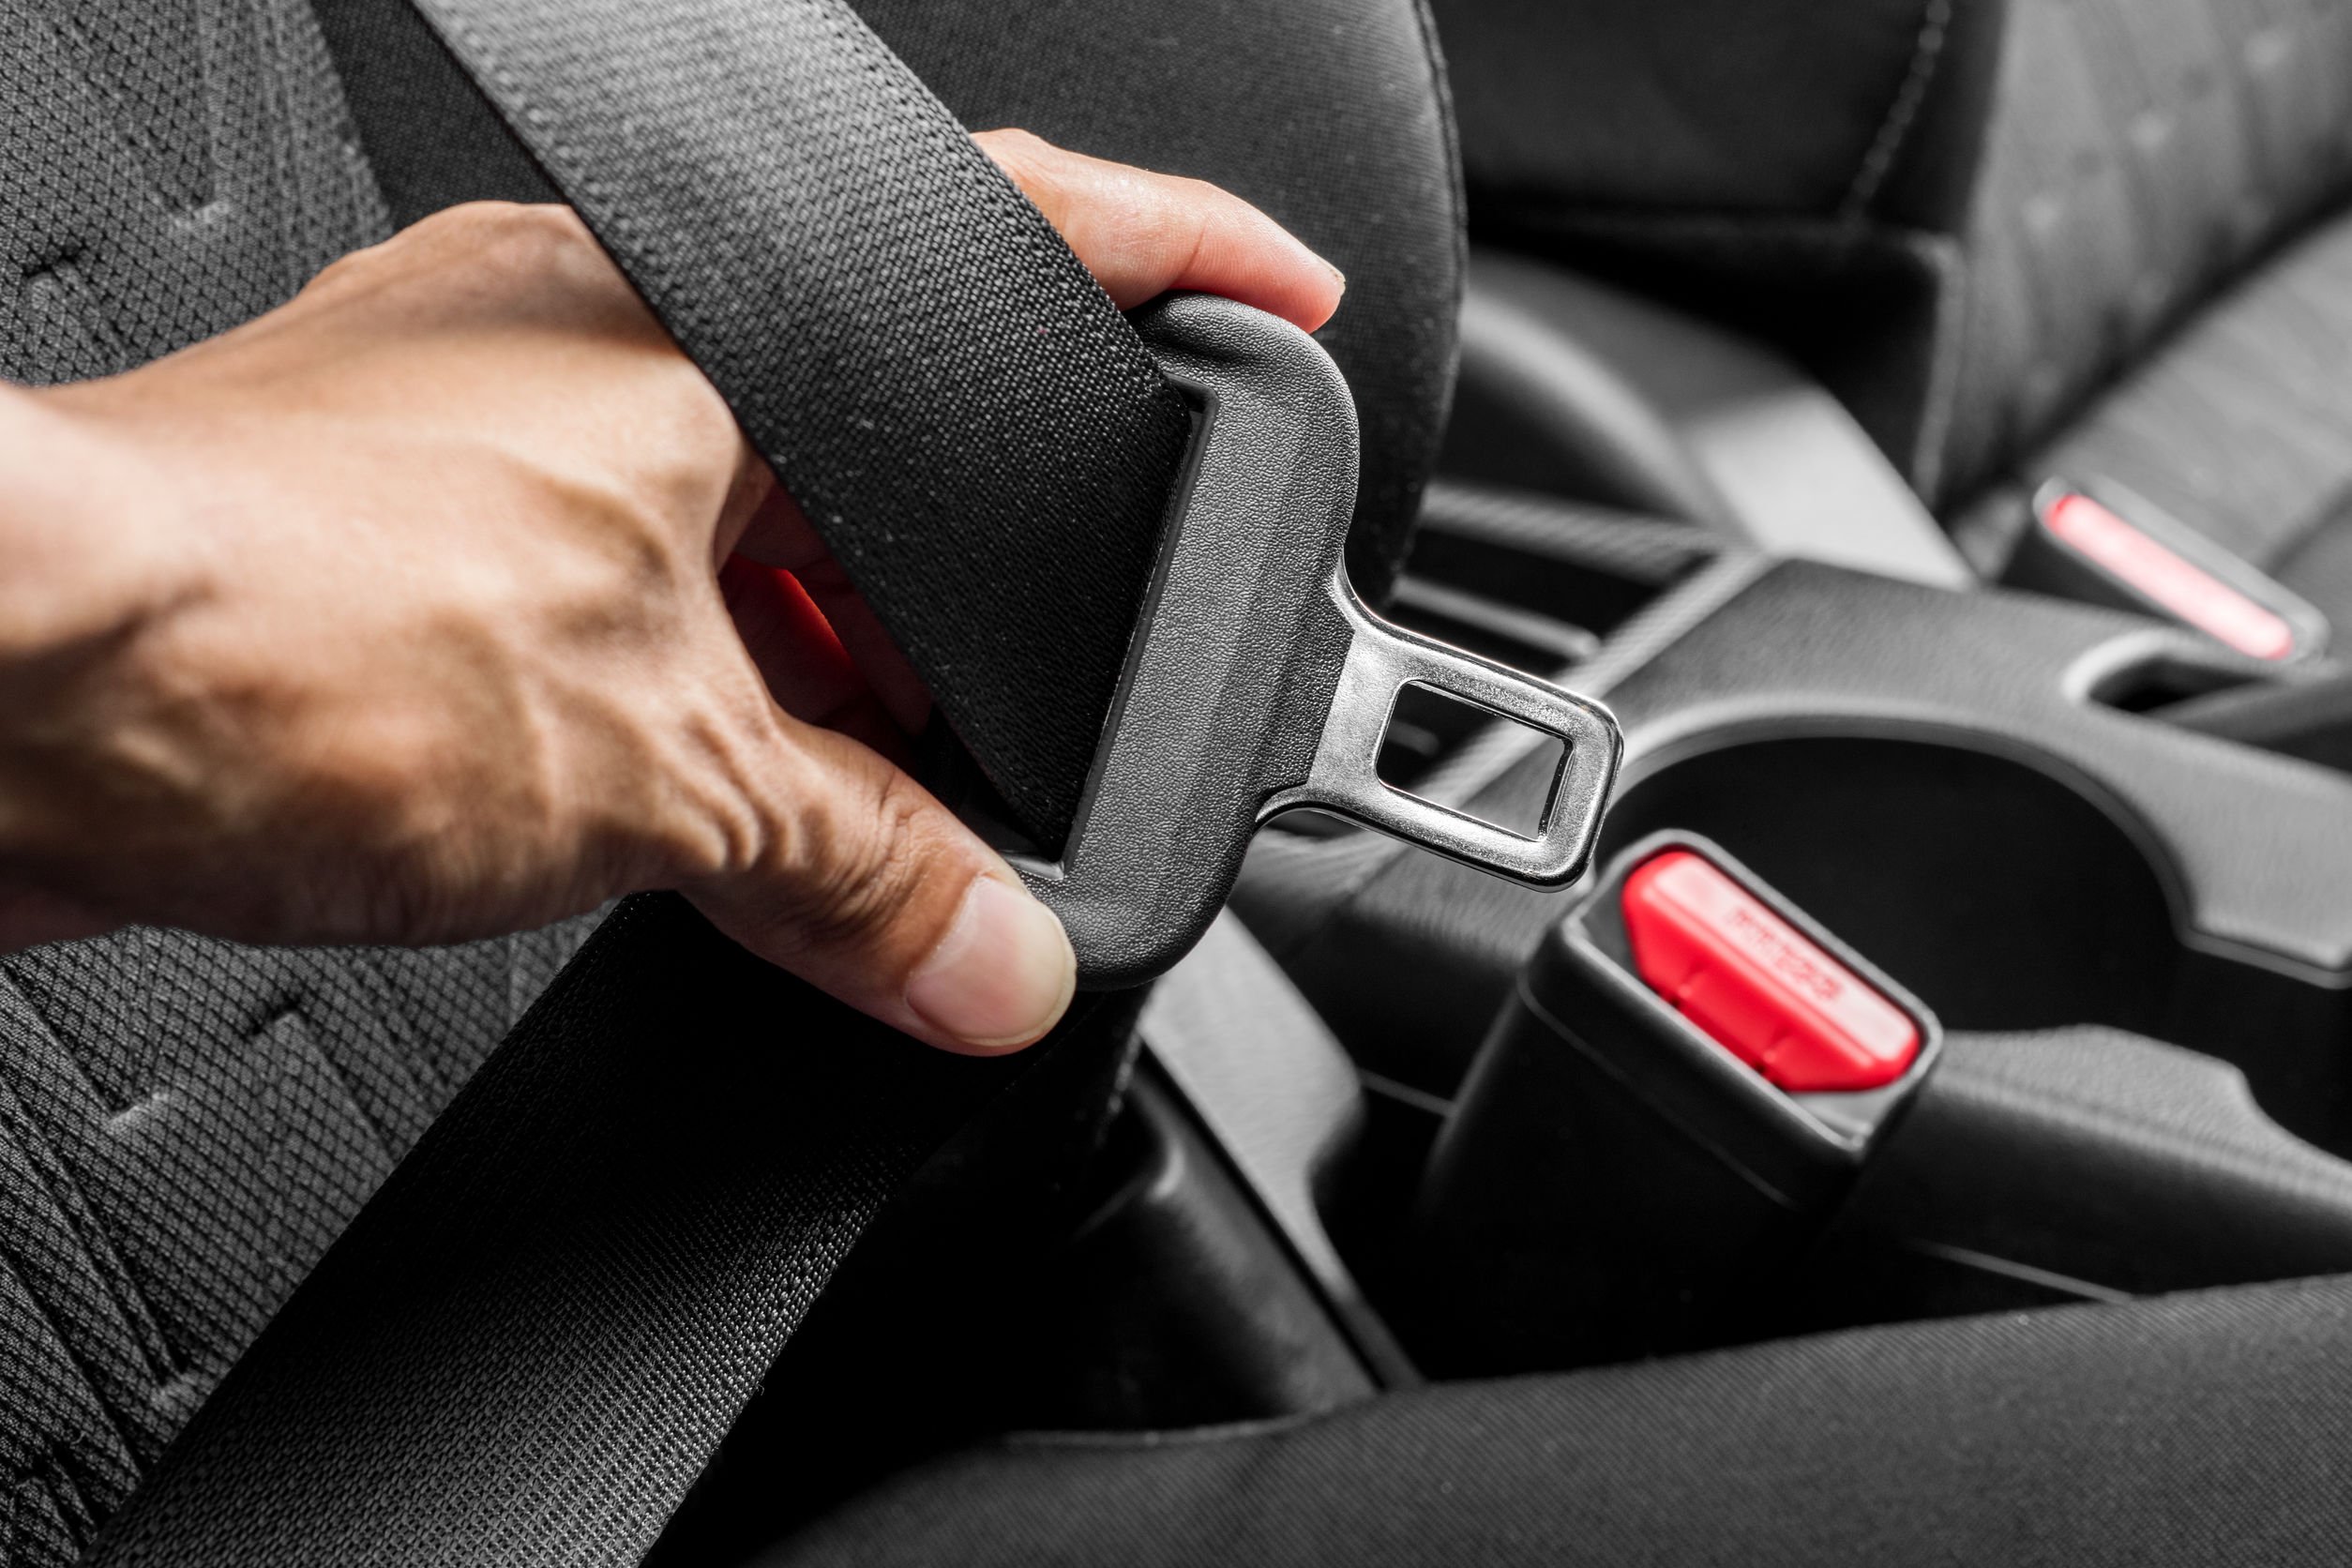 seatbelt nevada sabuk pengaman kalian ketahui belts retractor seatbelts fastnlow sesungguhnya zobuz